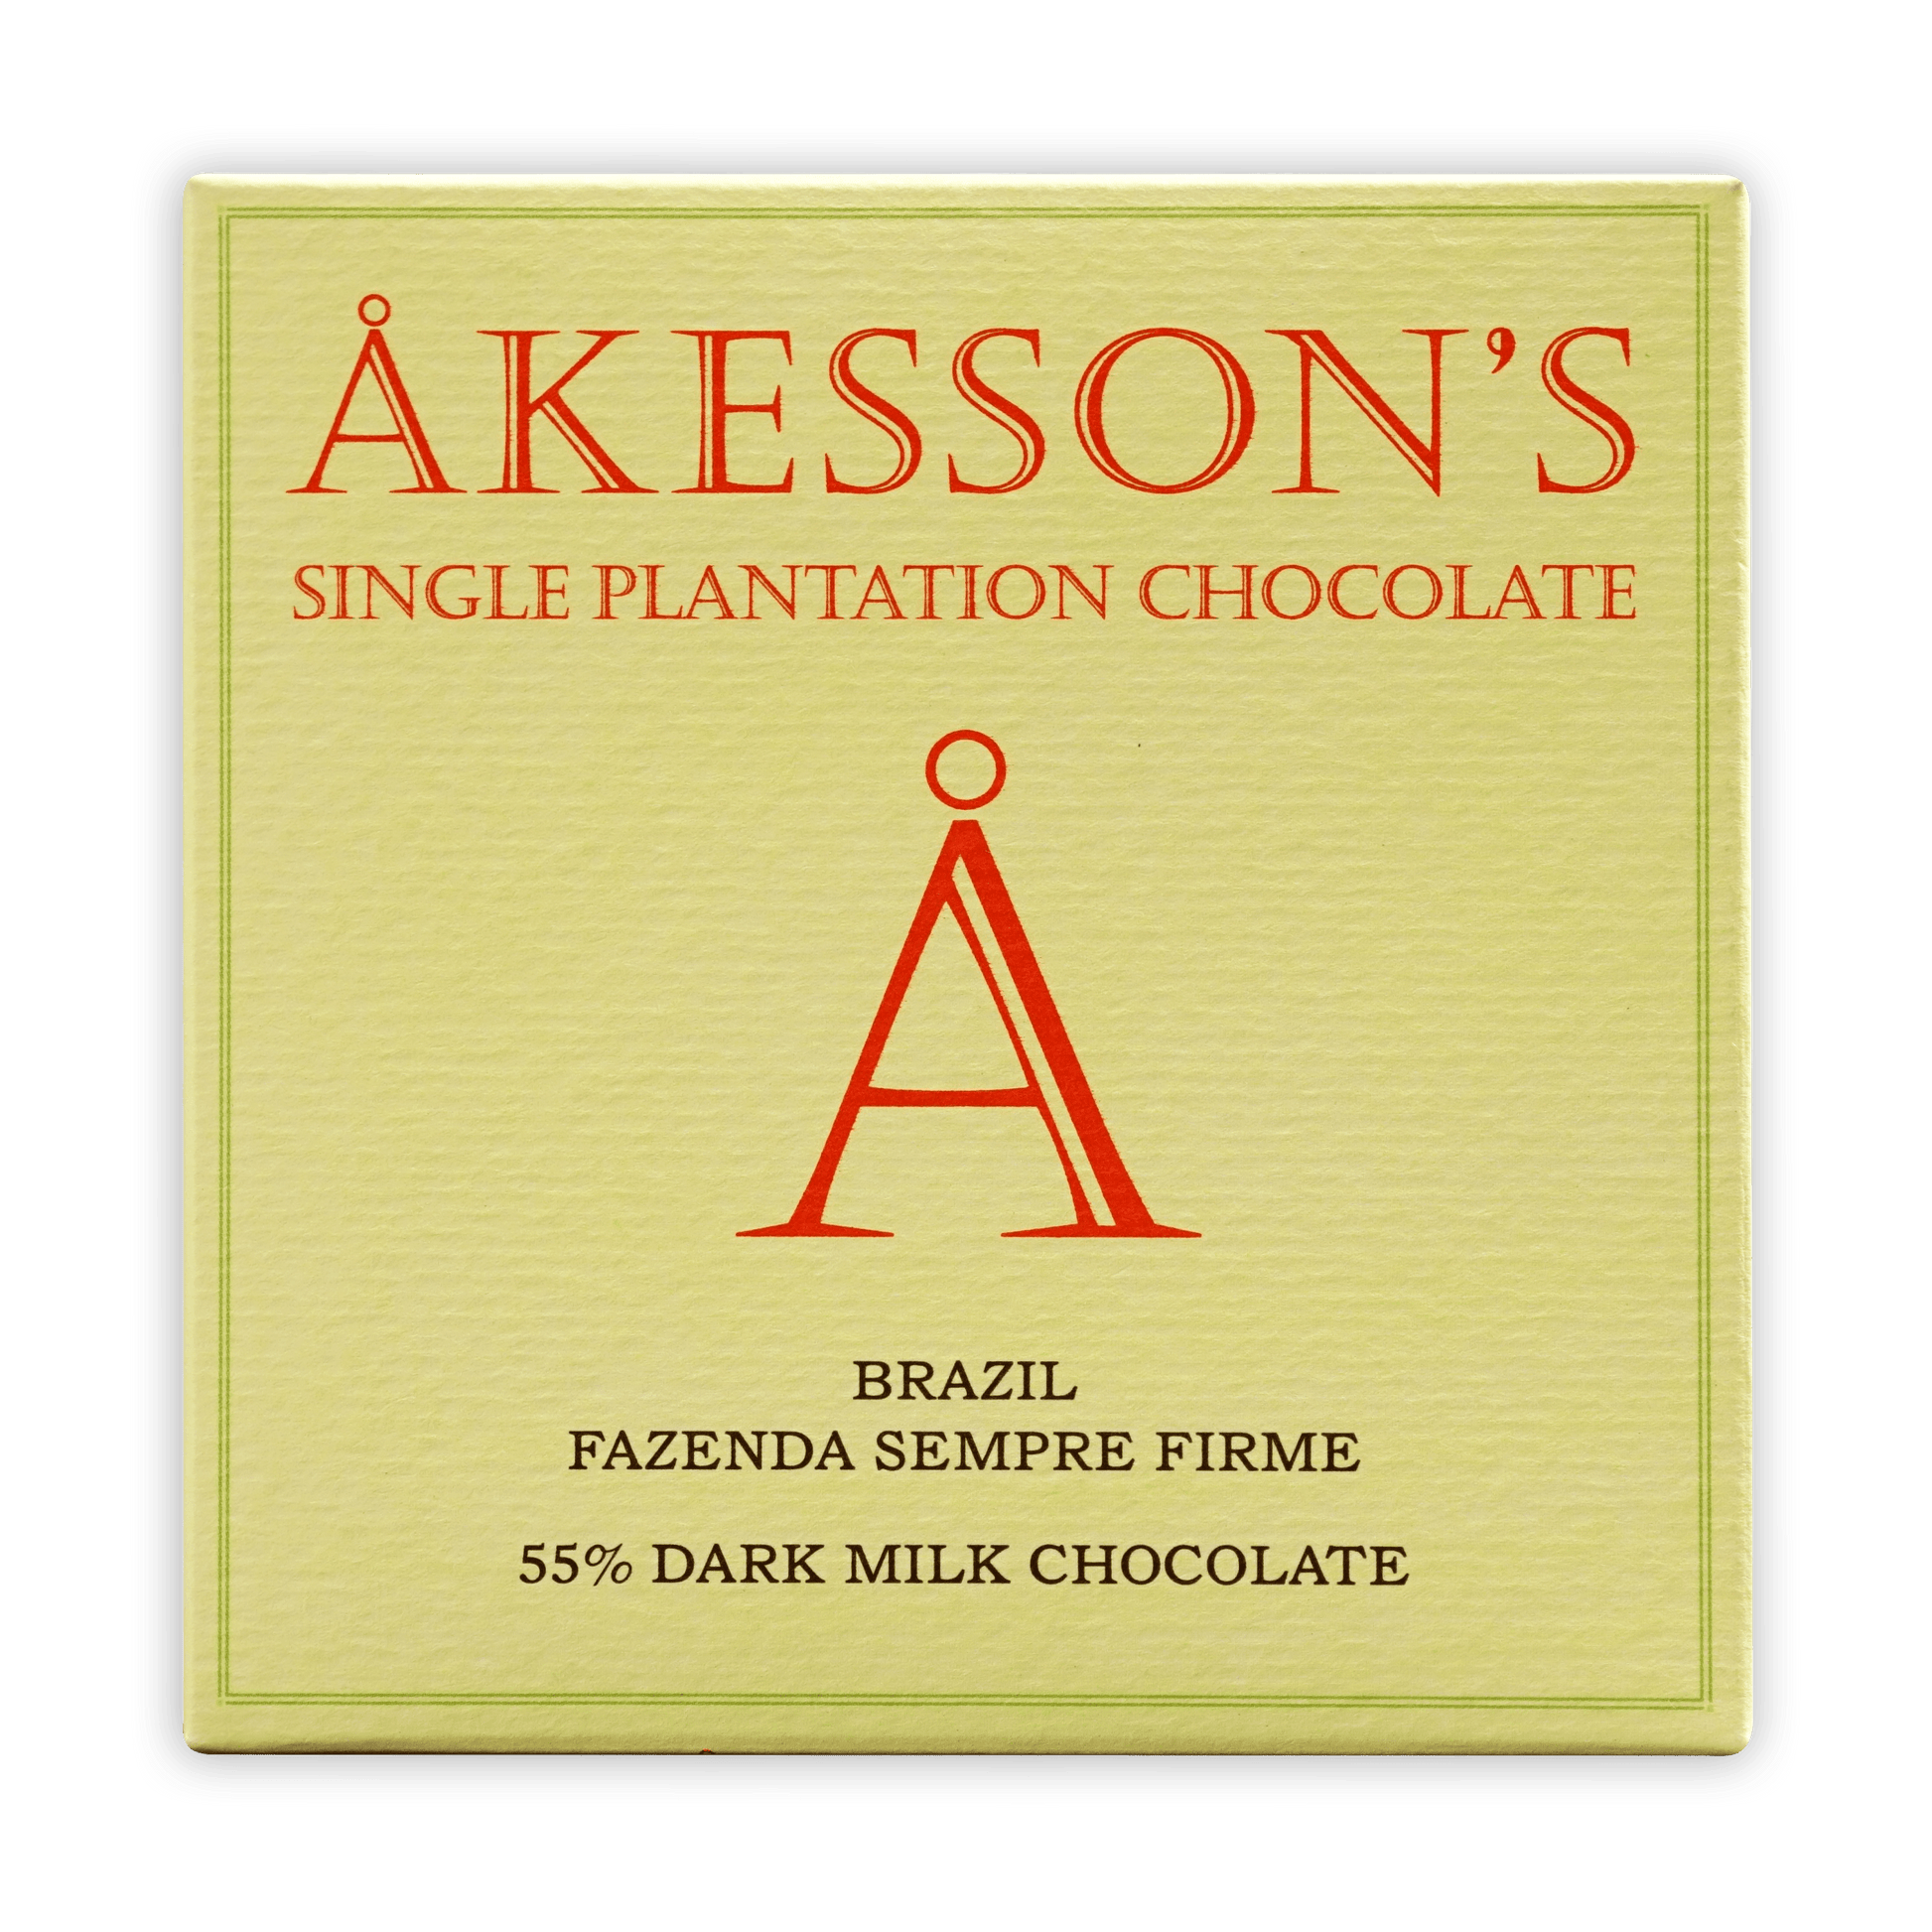 Akesson's Brazil 55% Dark Milk Chocolate